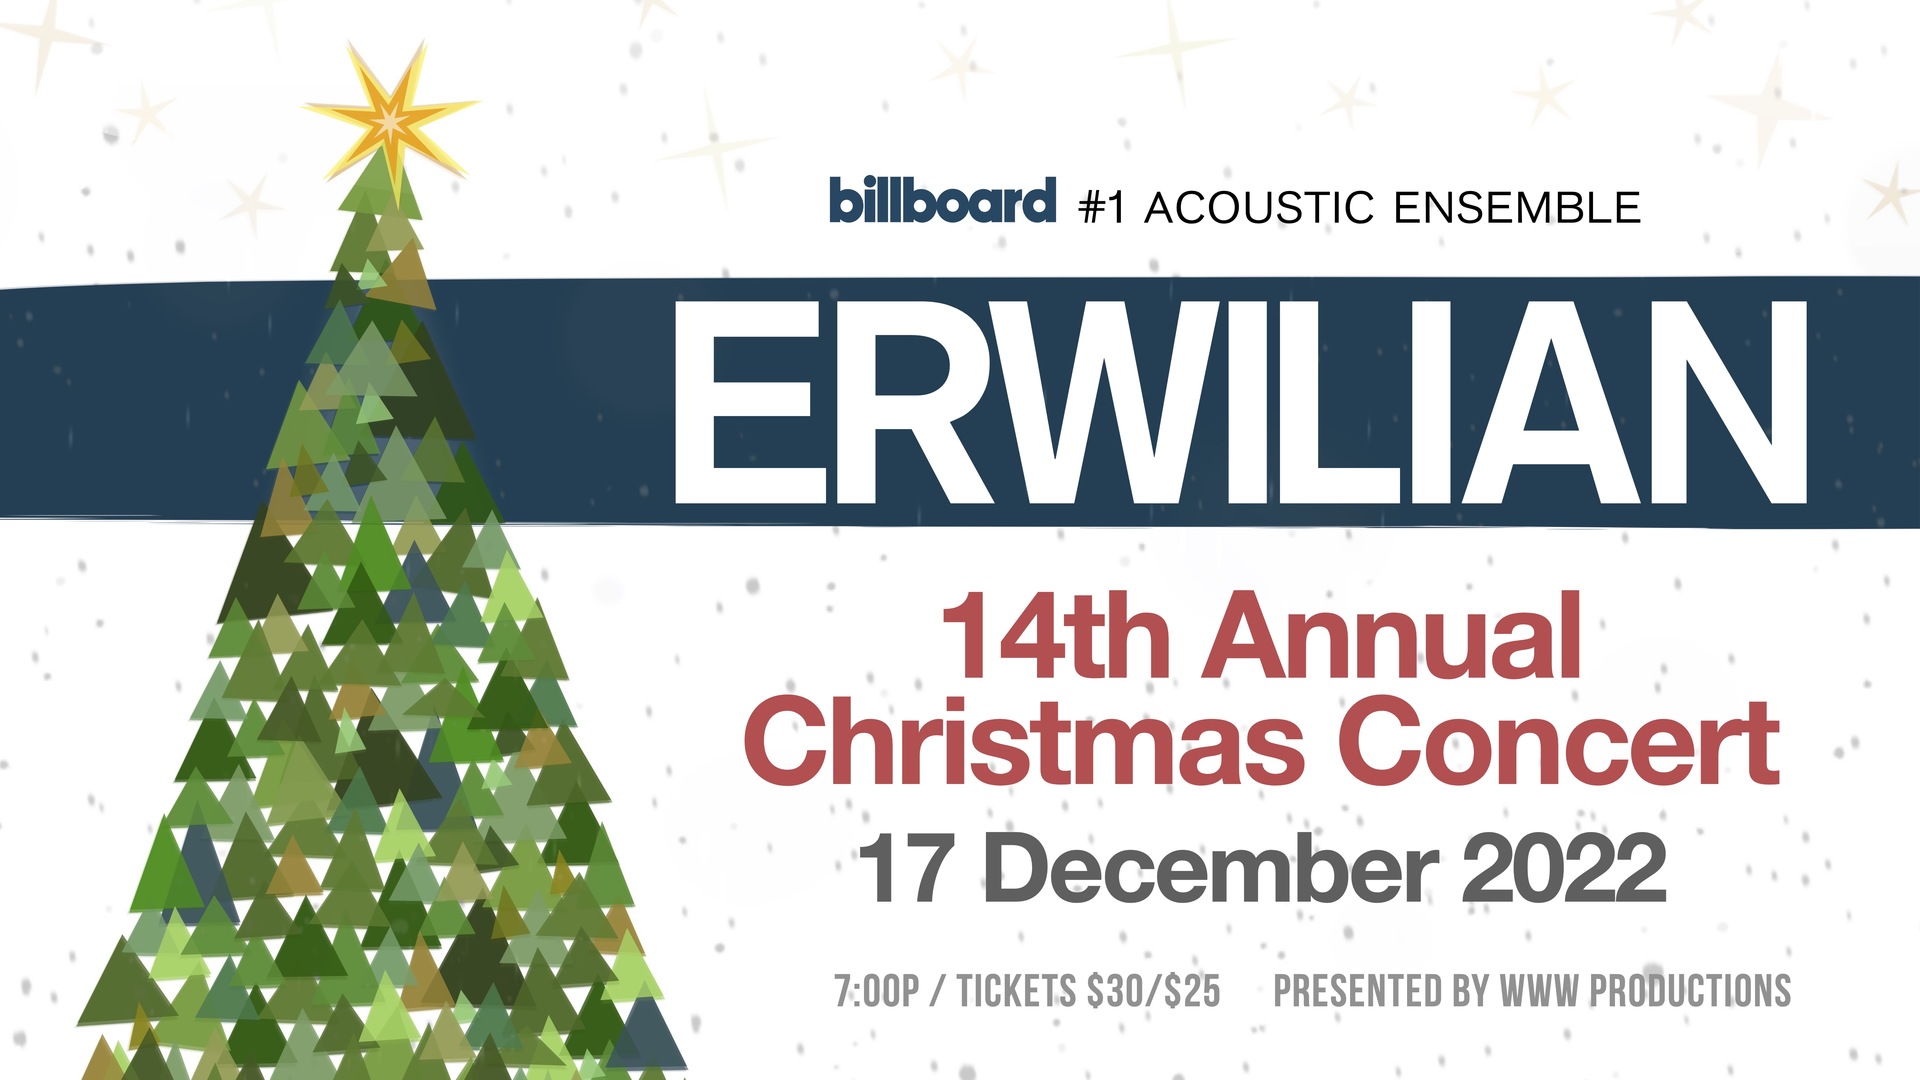 Erwilian 14th Annual Christmas Concert Music